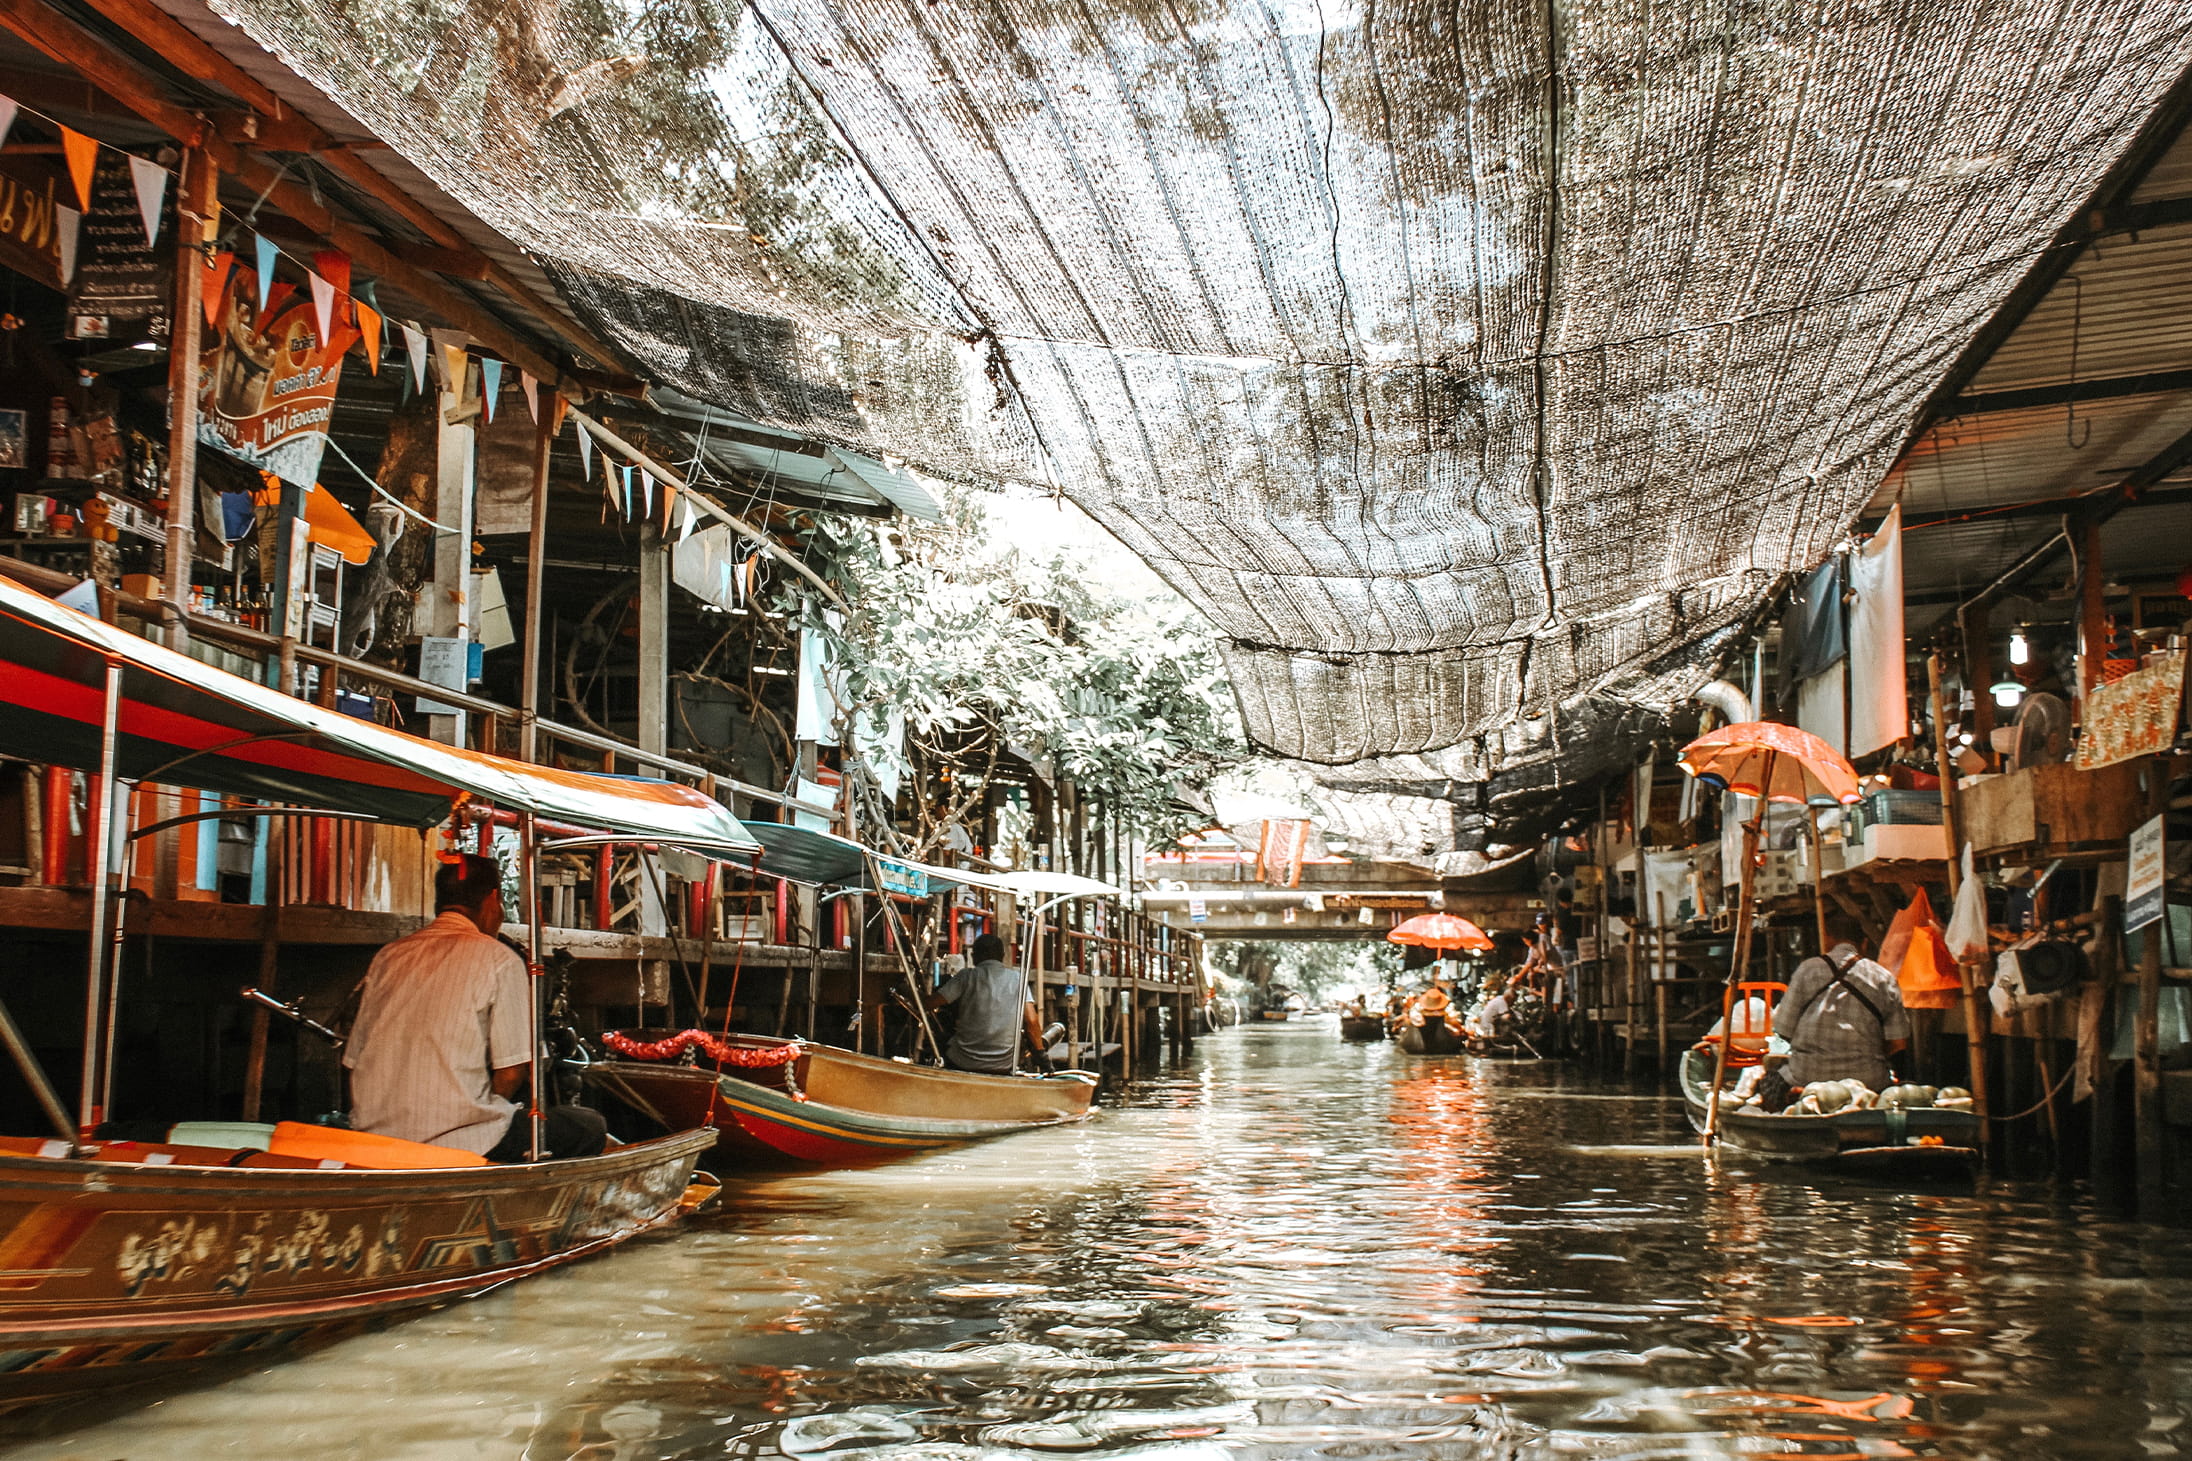 Culture trips around the world, Bangkok